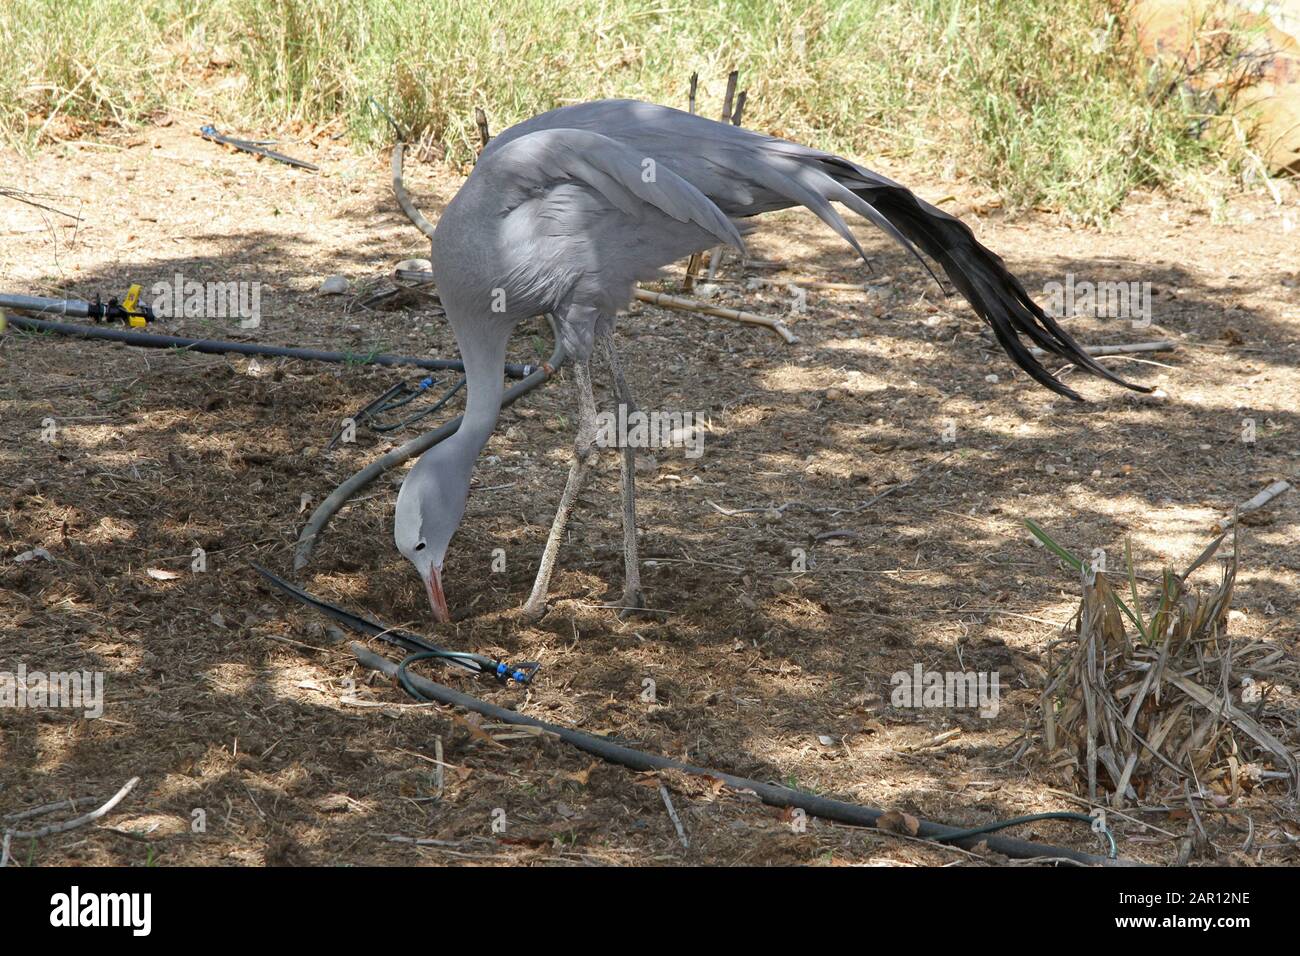 Blue crane, Hoedspruit Endangered Species Centre, Hazyview, Mpumalanga, South Africa. Stock Photo